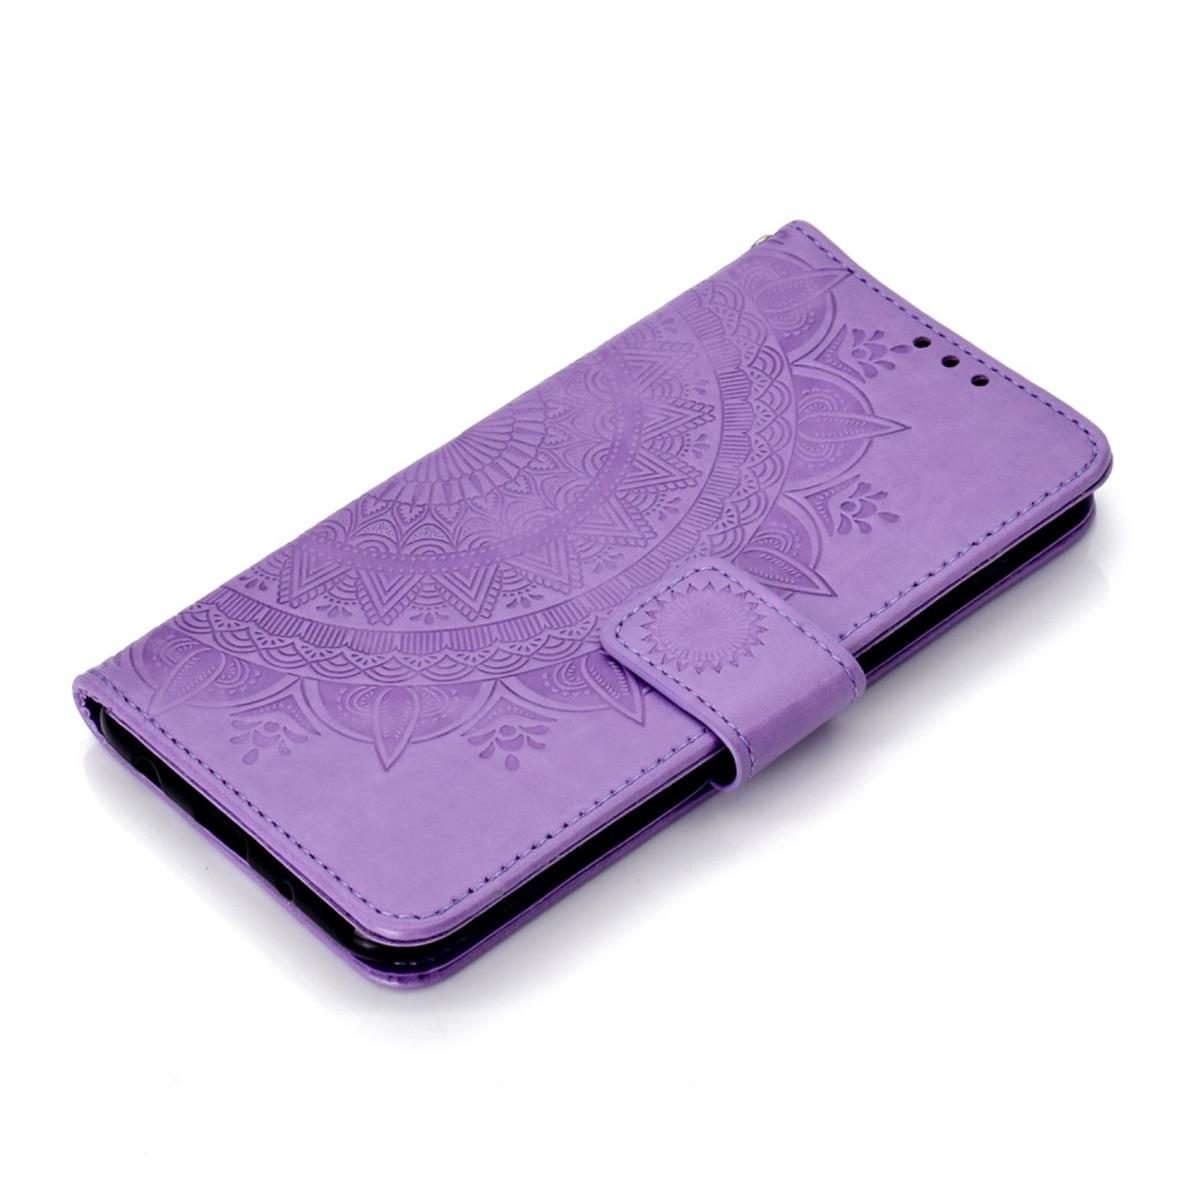 Hülle für Samsung Galaxy A10 Handyhülle Schutz Tasche Flip Case Etui Cover Mandala Lila